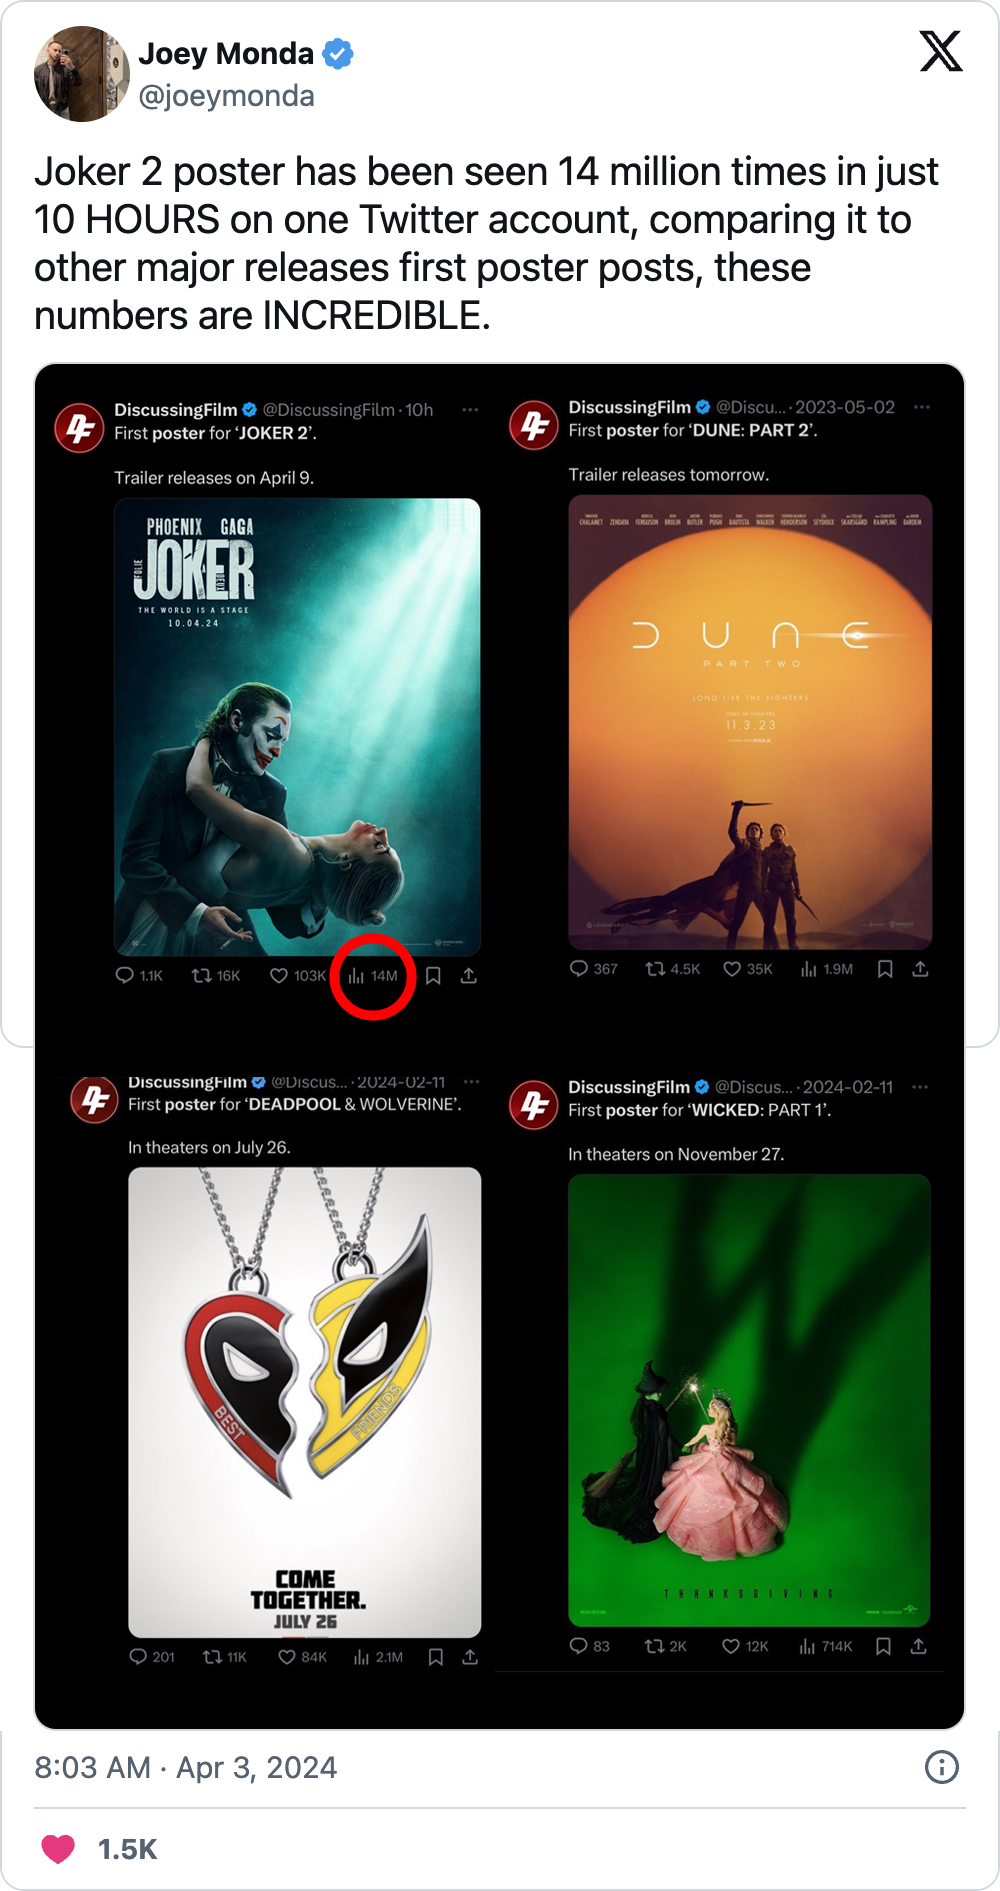 Joker 2 poster views vs. other recent movie poster views.